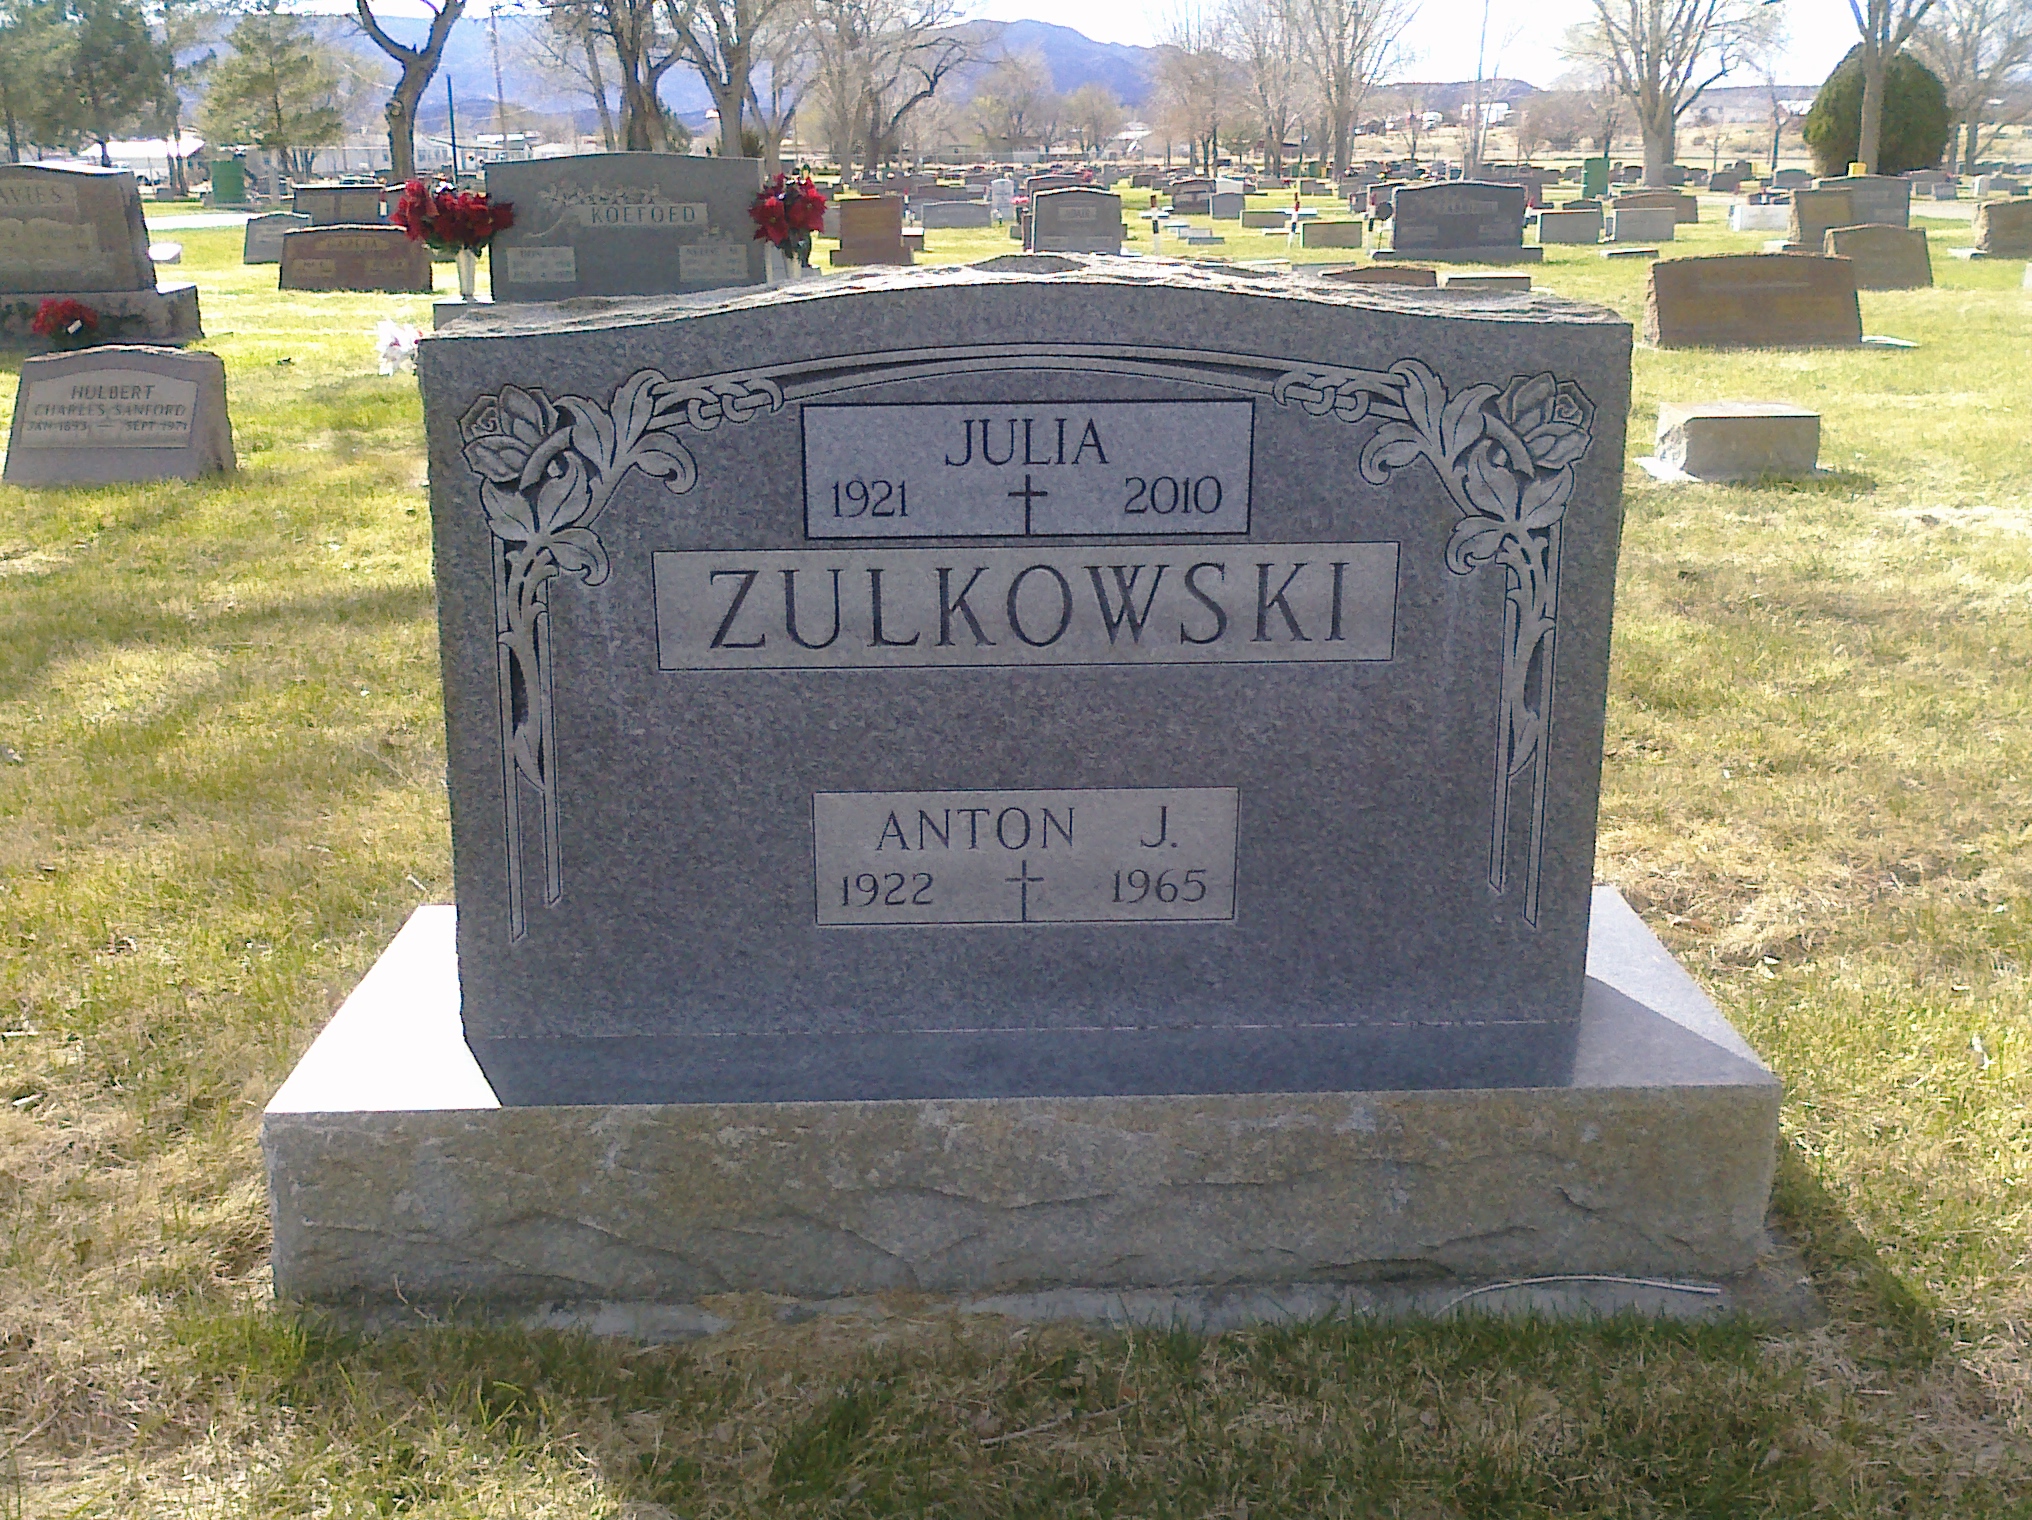 Anton and Julia Zulkowski’s grave (30 MAR 2011)